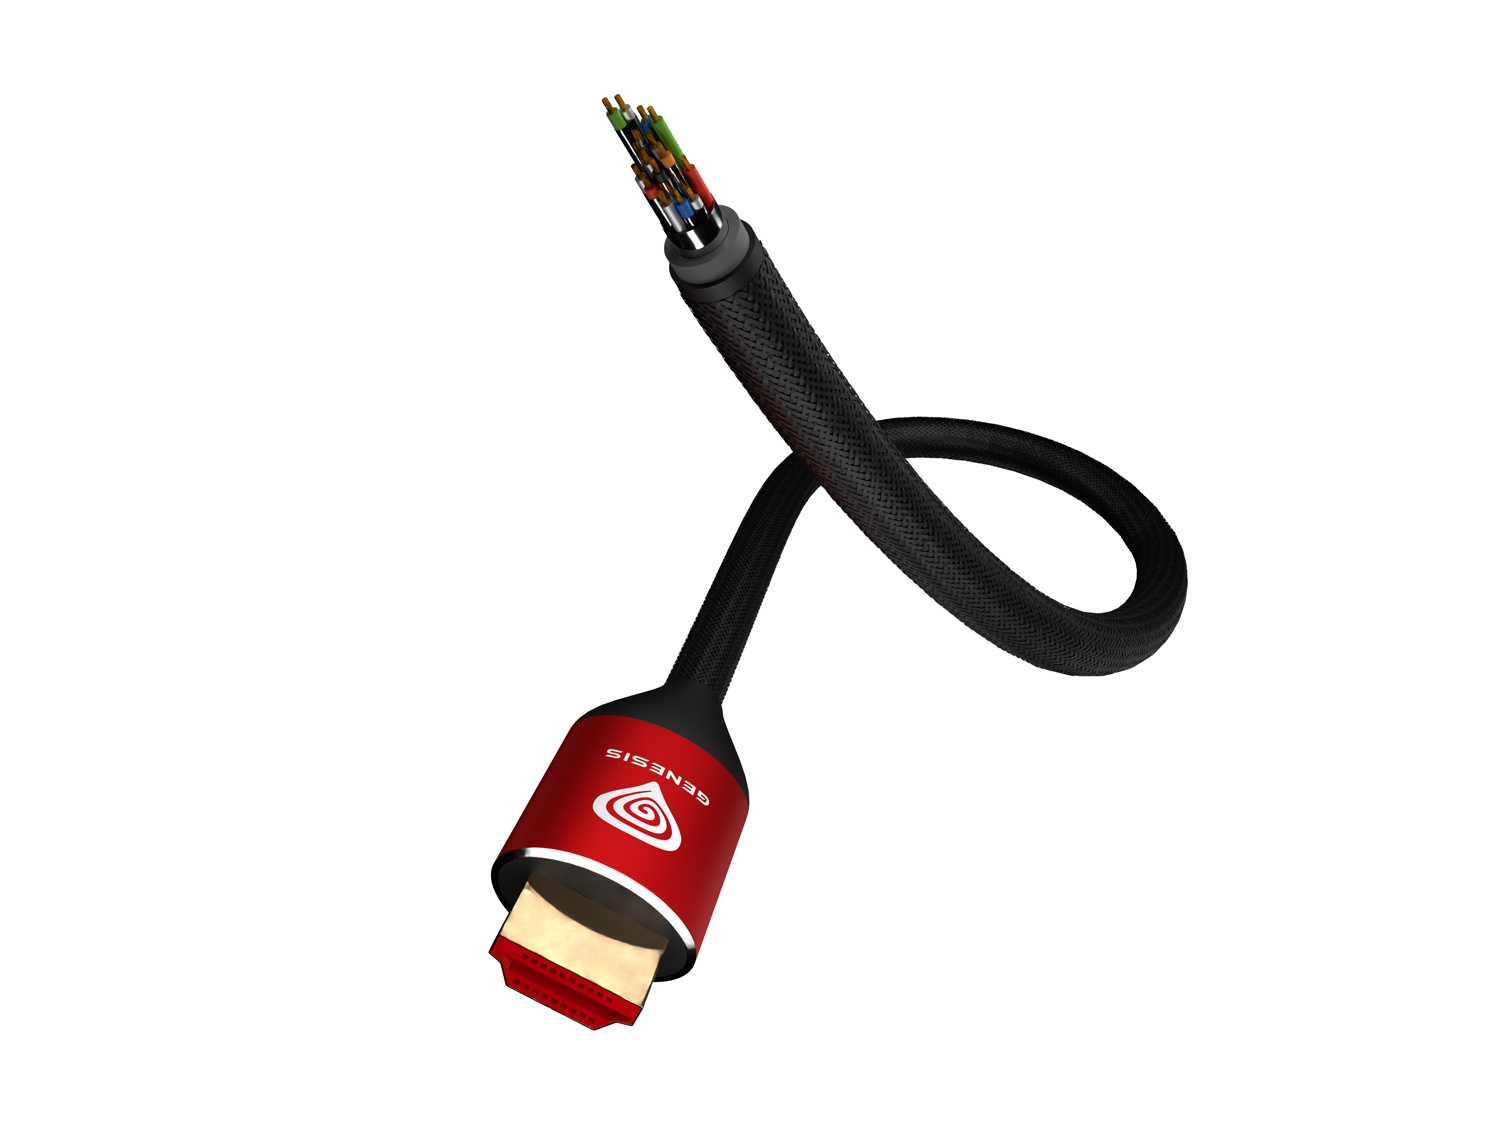 Obrázek Genesis kabel HDMI M/M V2.1 3M 8K pro PS5/PS4